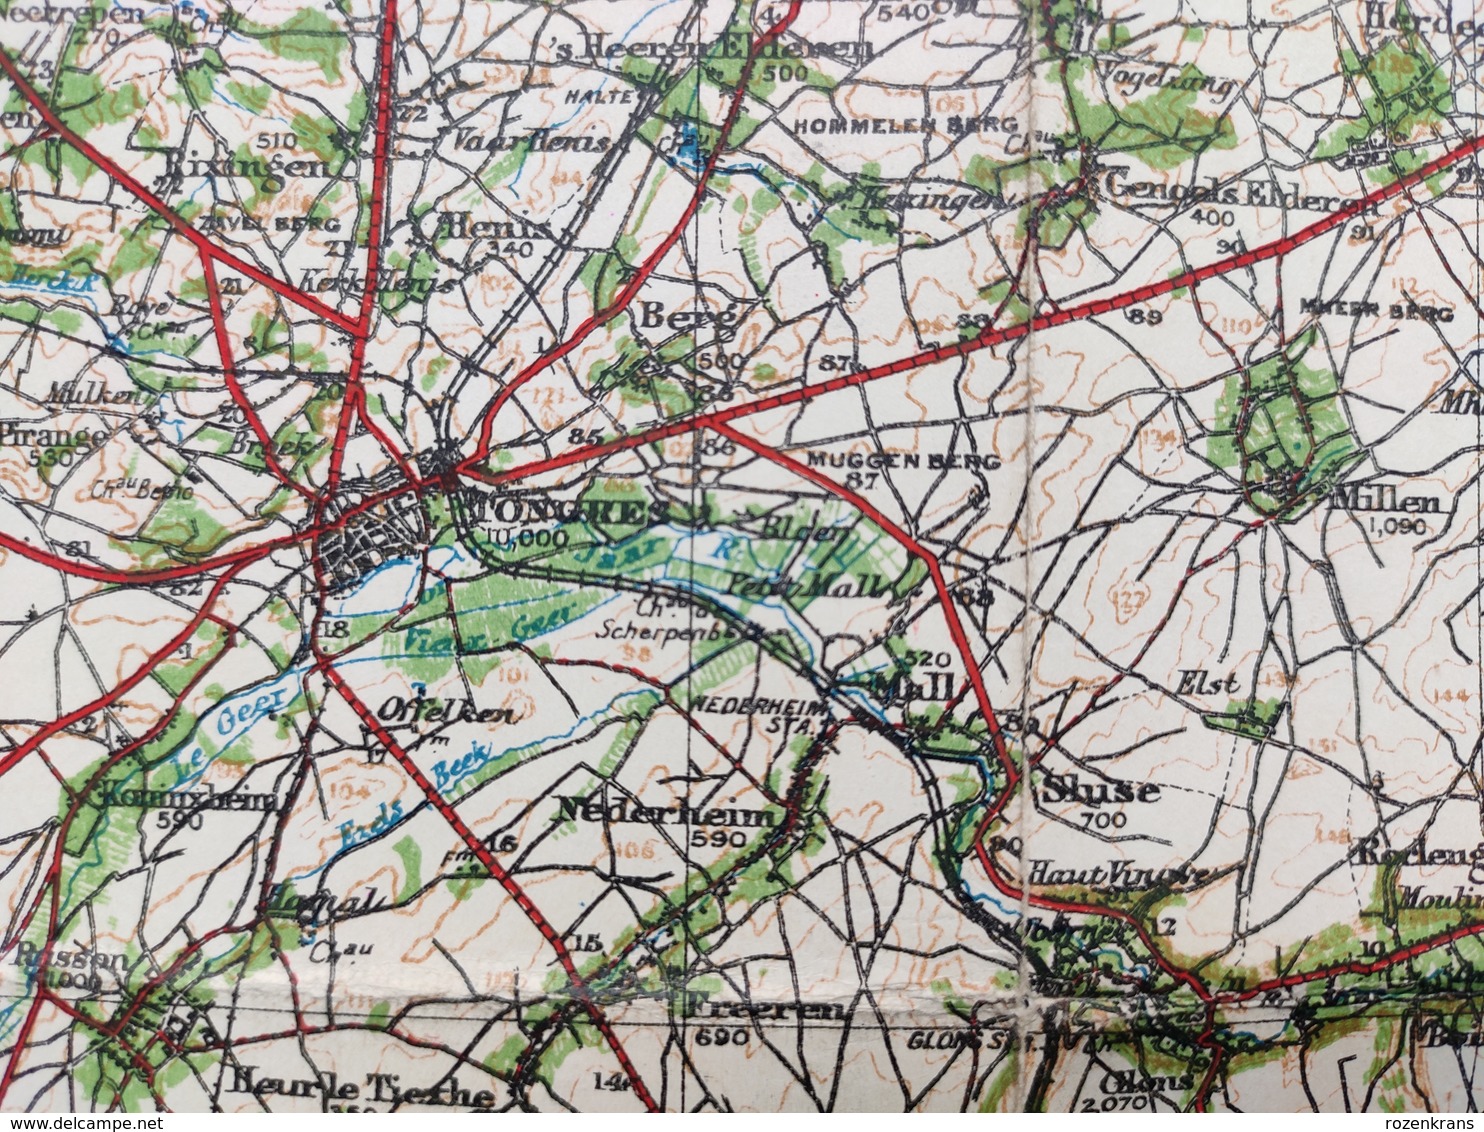 Carte Topographique Militaire UK War Office 1919 World War 1 WW1 Liege Verviers Hageland Diest Huy Maastricht Tongeren